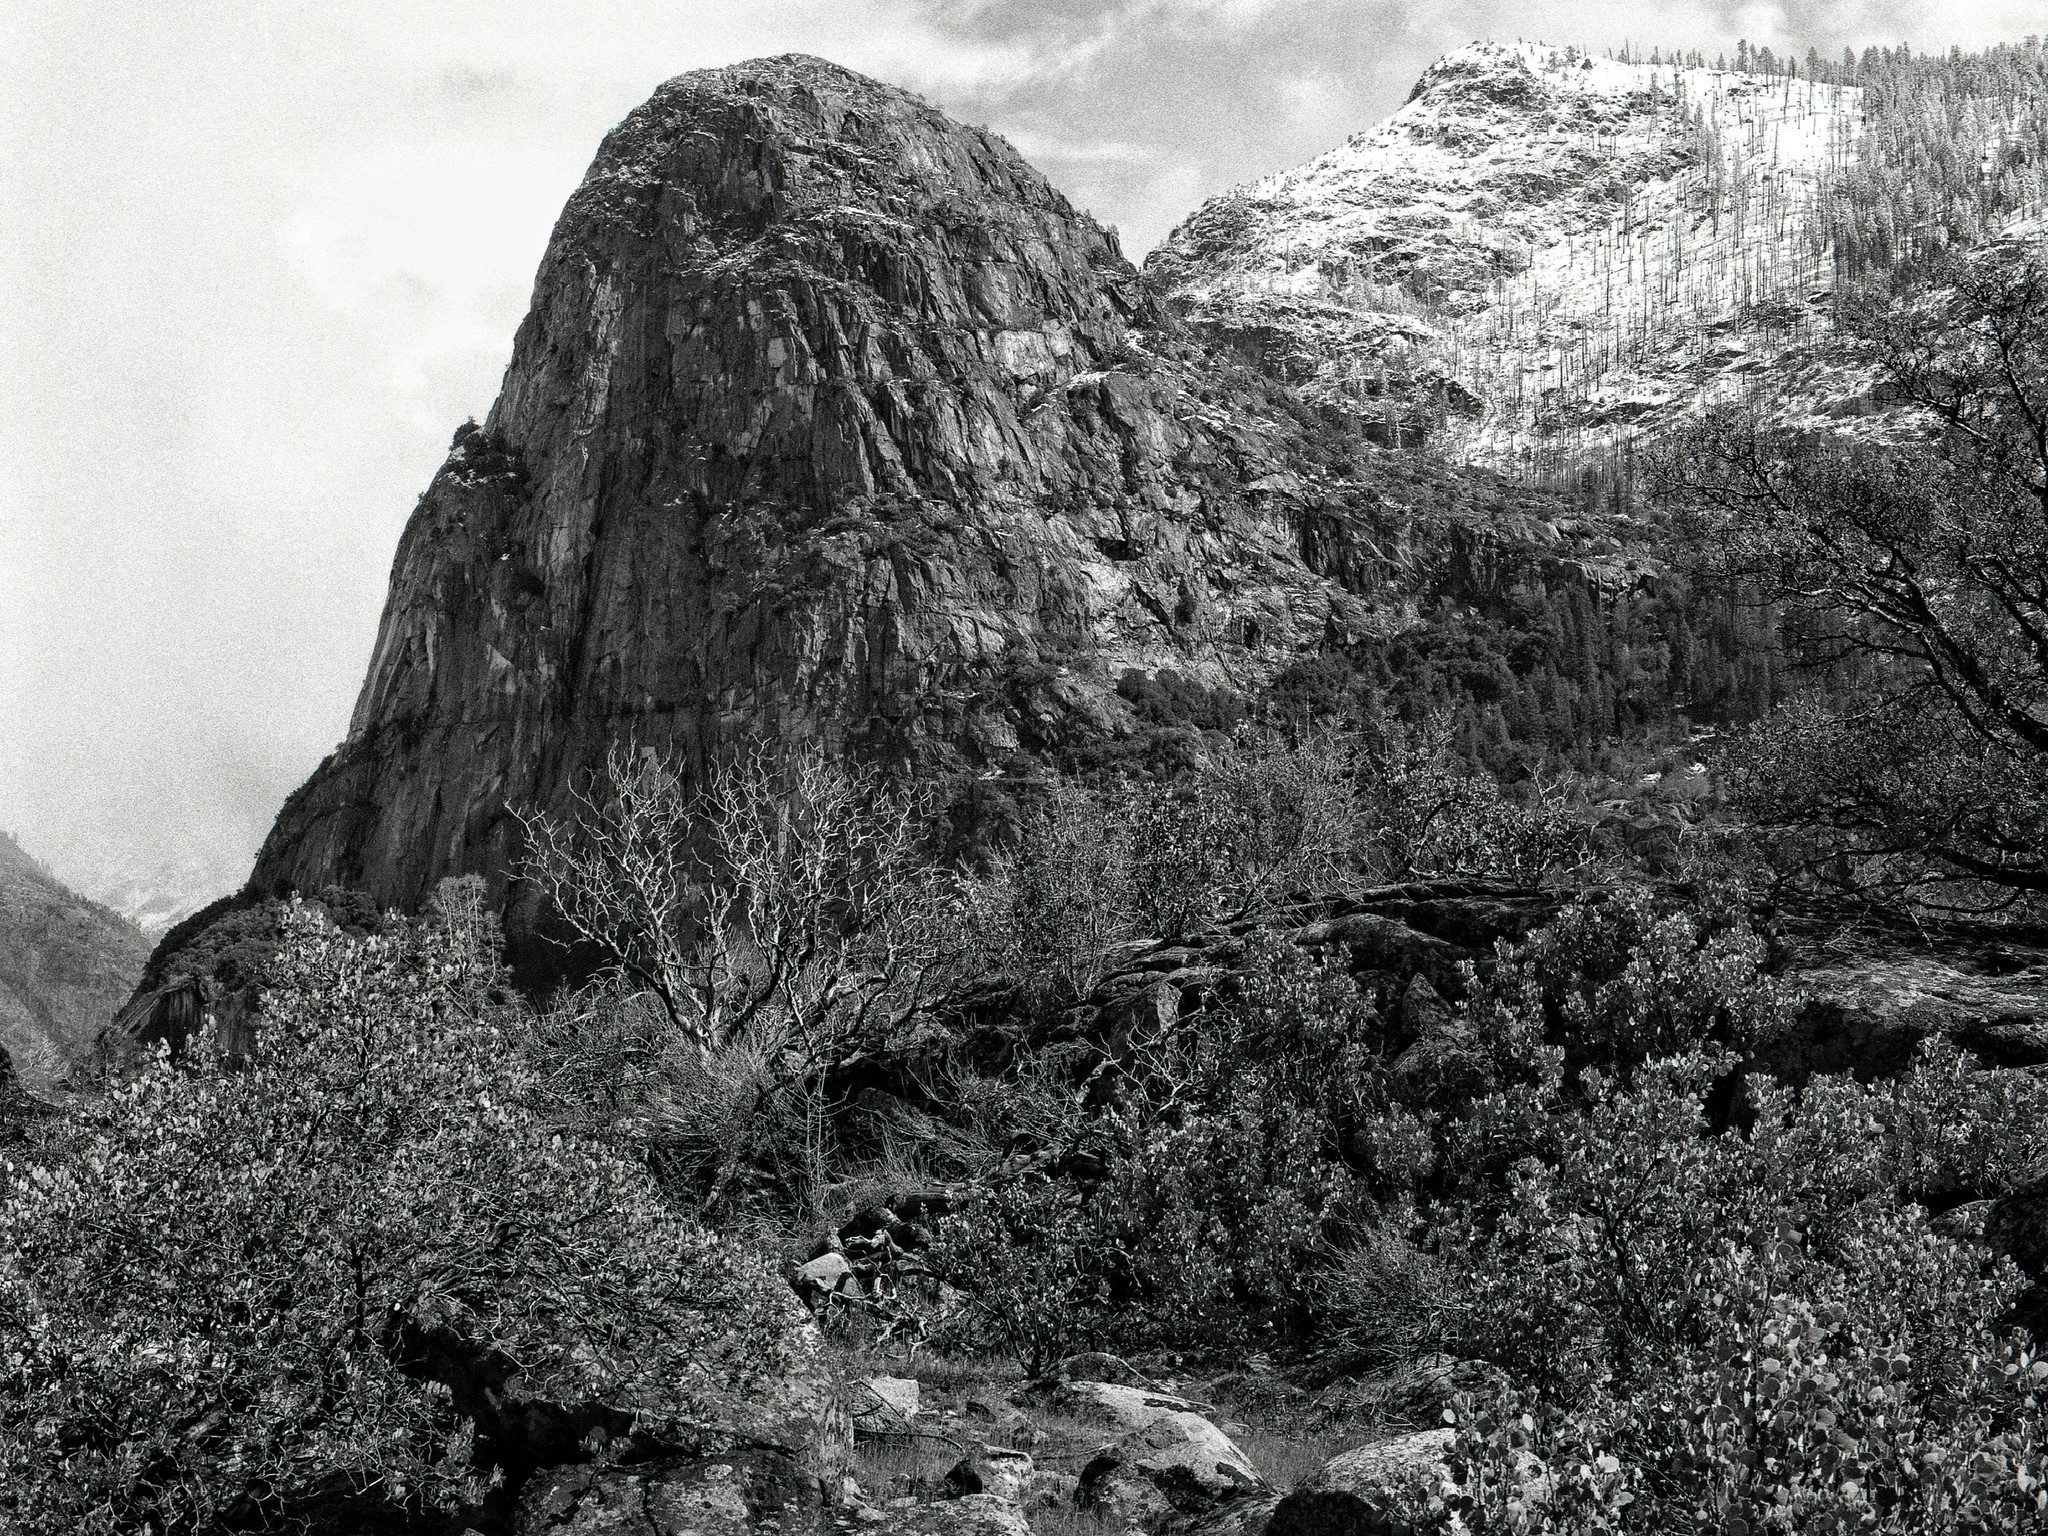 A long exhausting hike to view Kolana Rock in Hetch Hetchy (California)